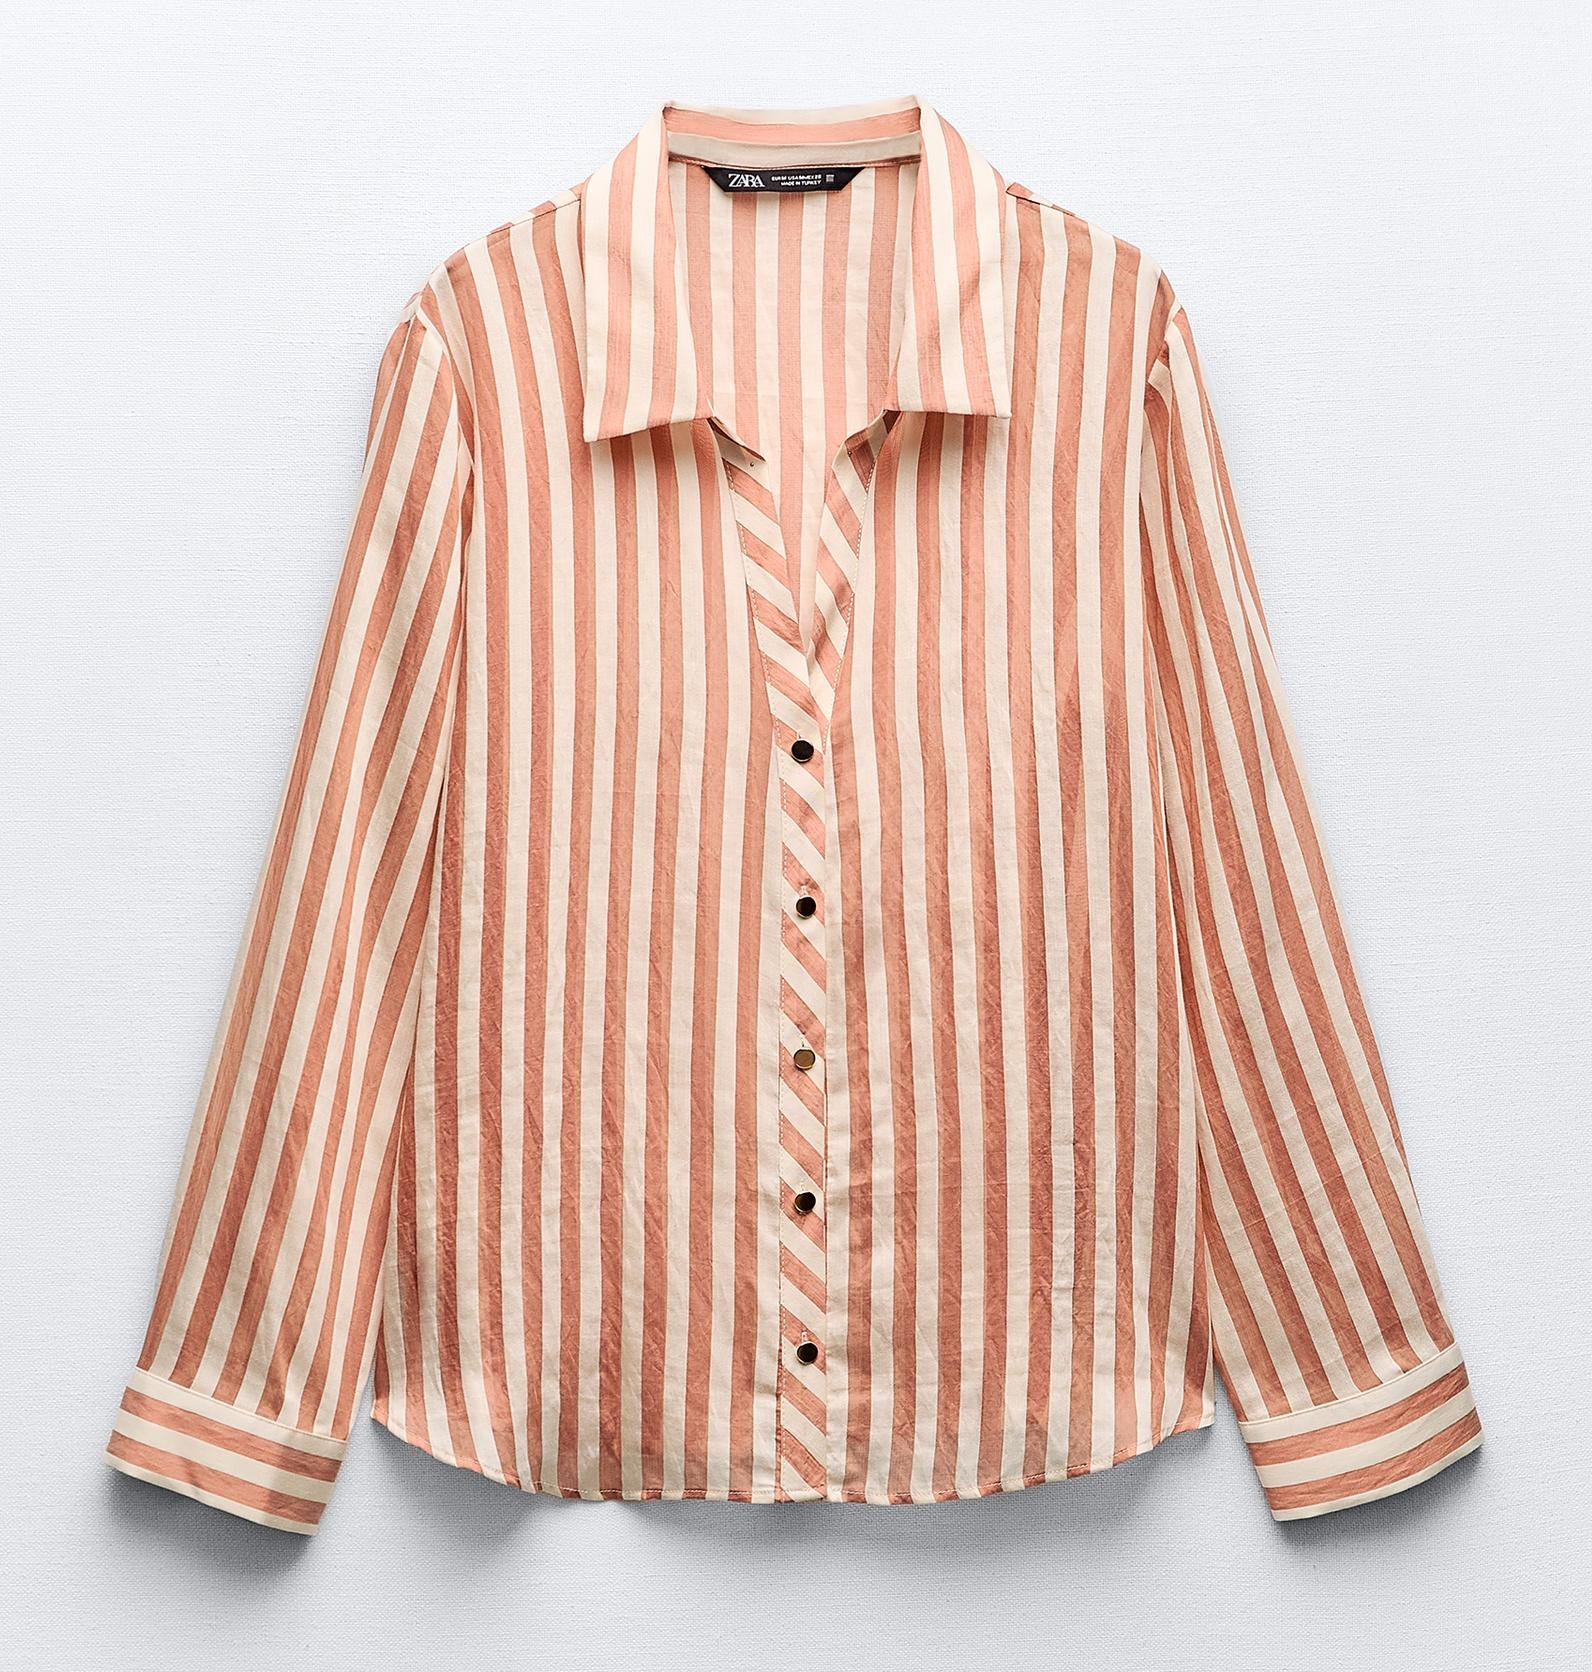 Рубашка Zara Striped, темно-оранжевый толстовка zara seamless technical темно оранжевый